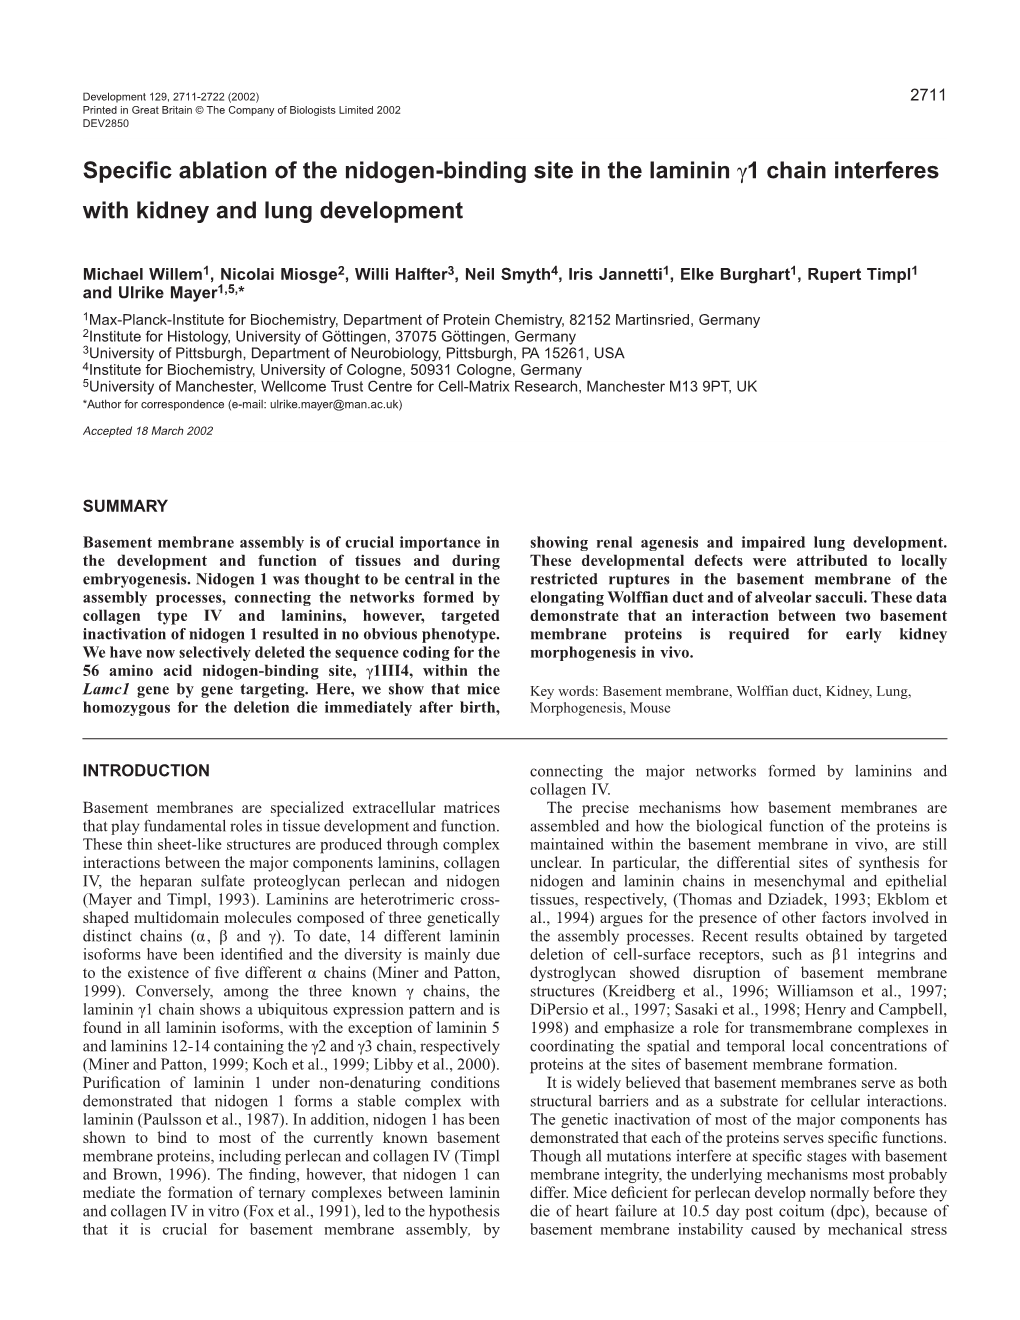 Laminin-Nidogen Interaction and Urogenital Development 2713